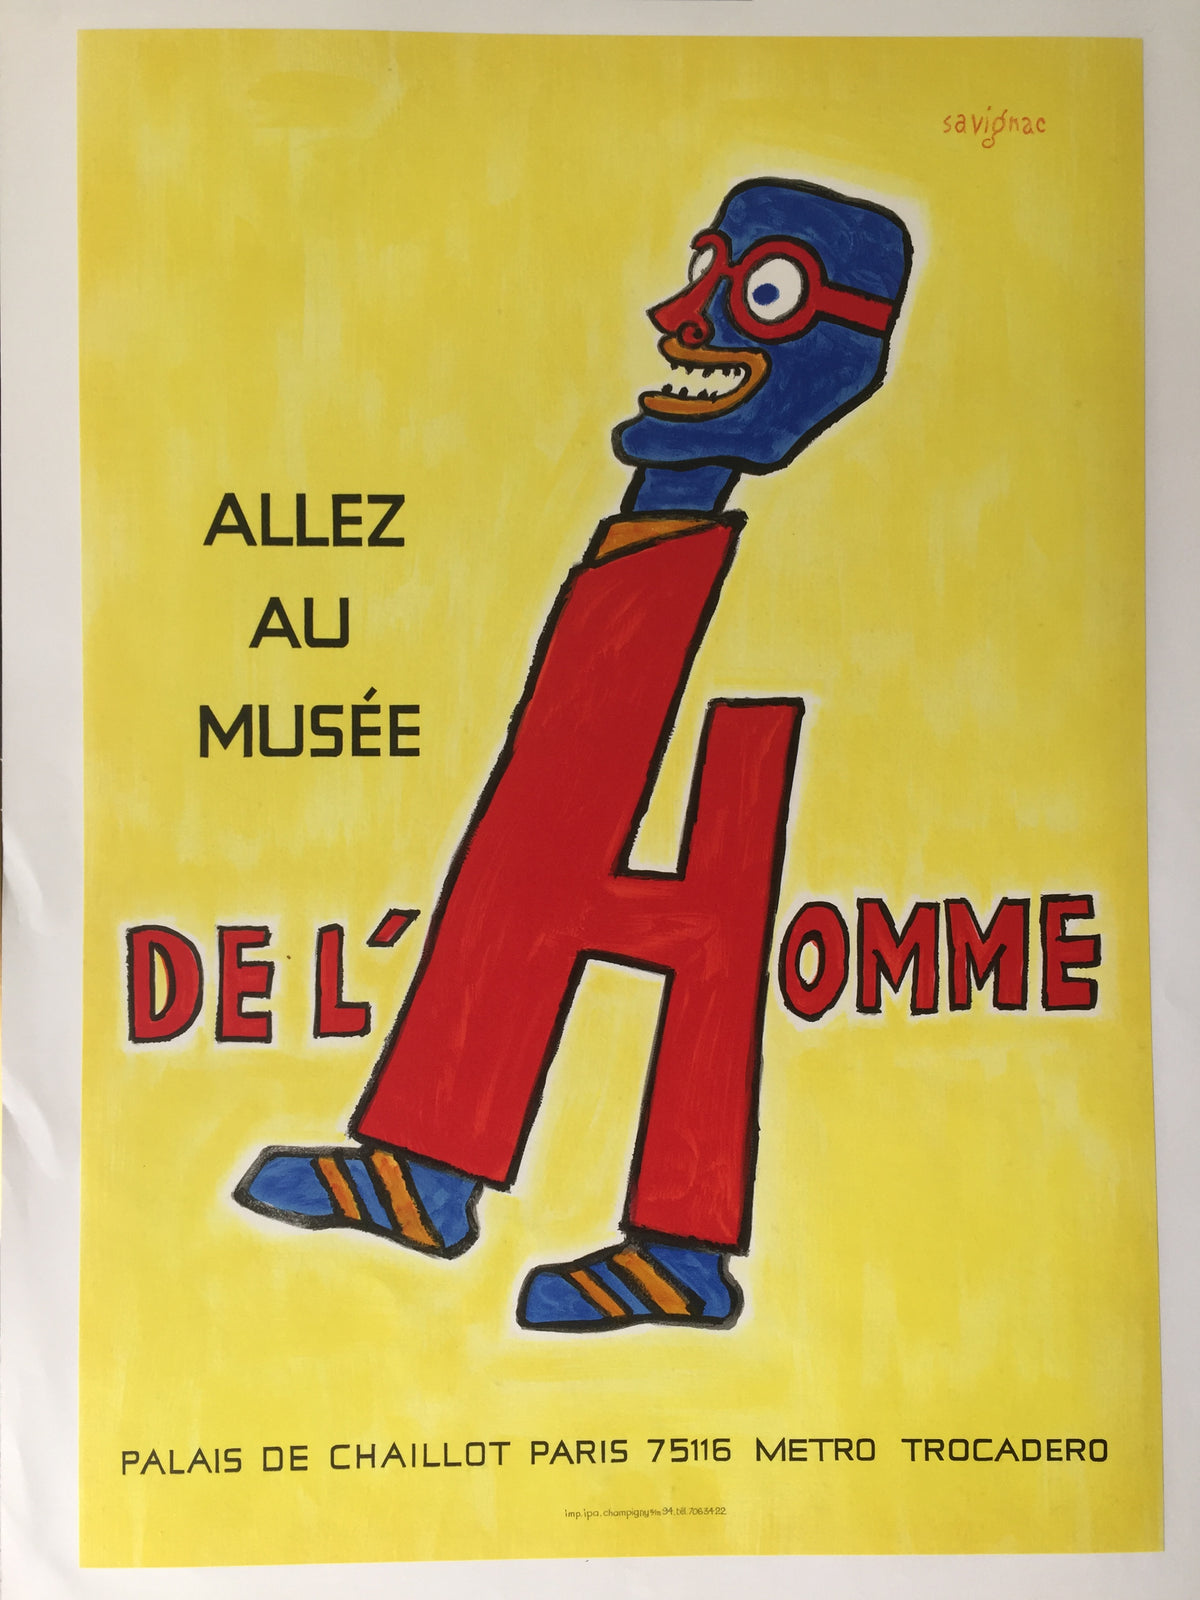 Musée de l'homme by Raymond Savignac